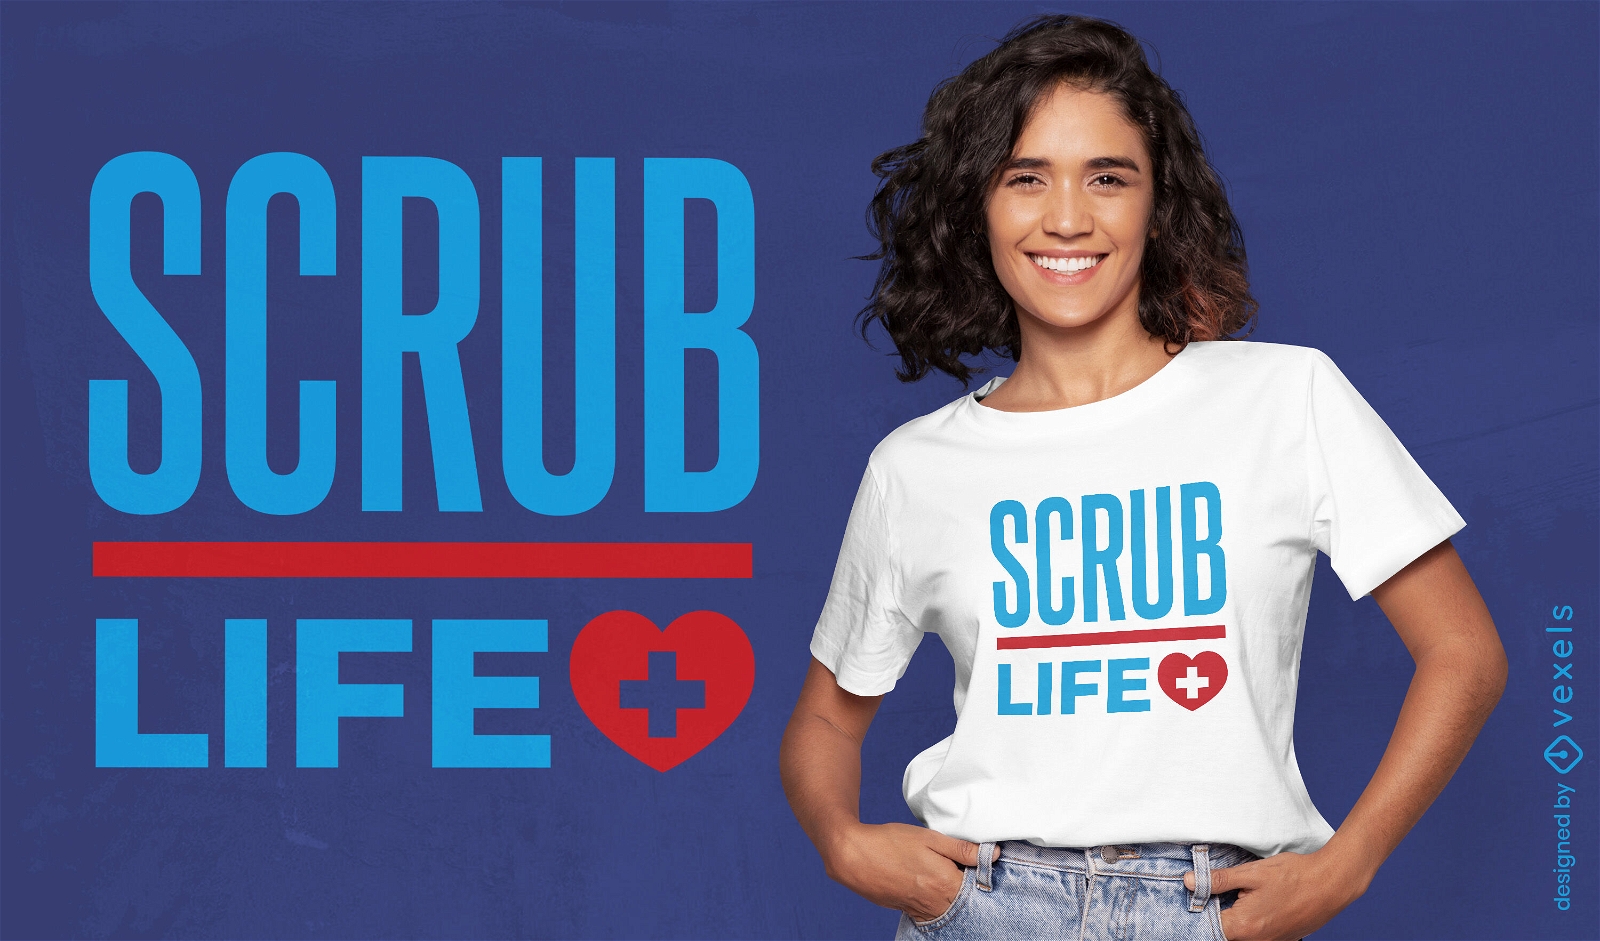 Diseño de camiseta Scrub Life.